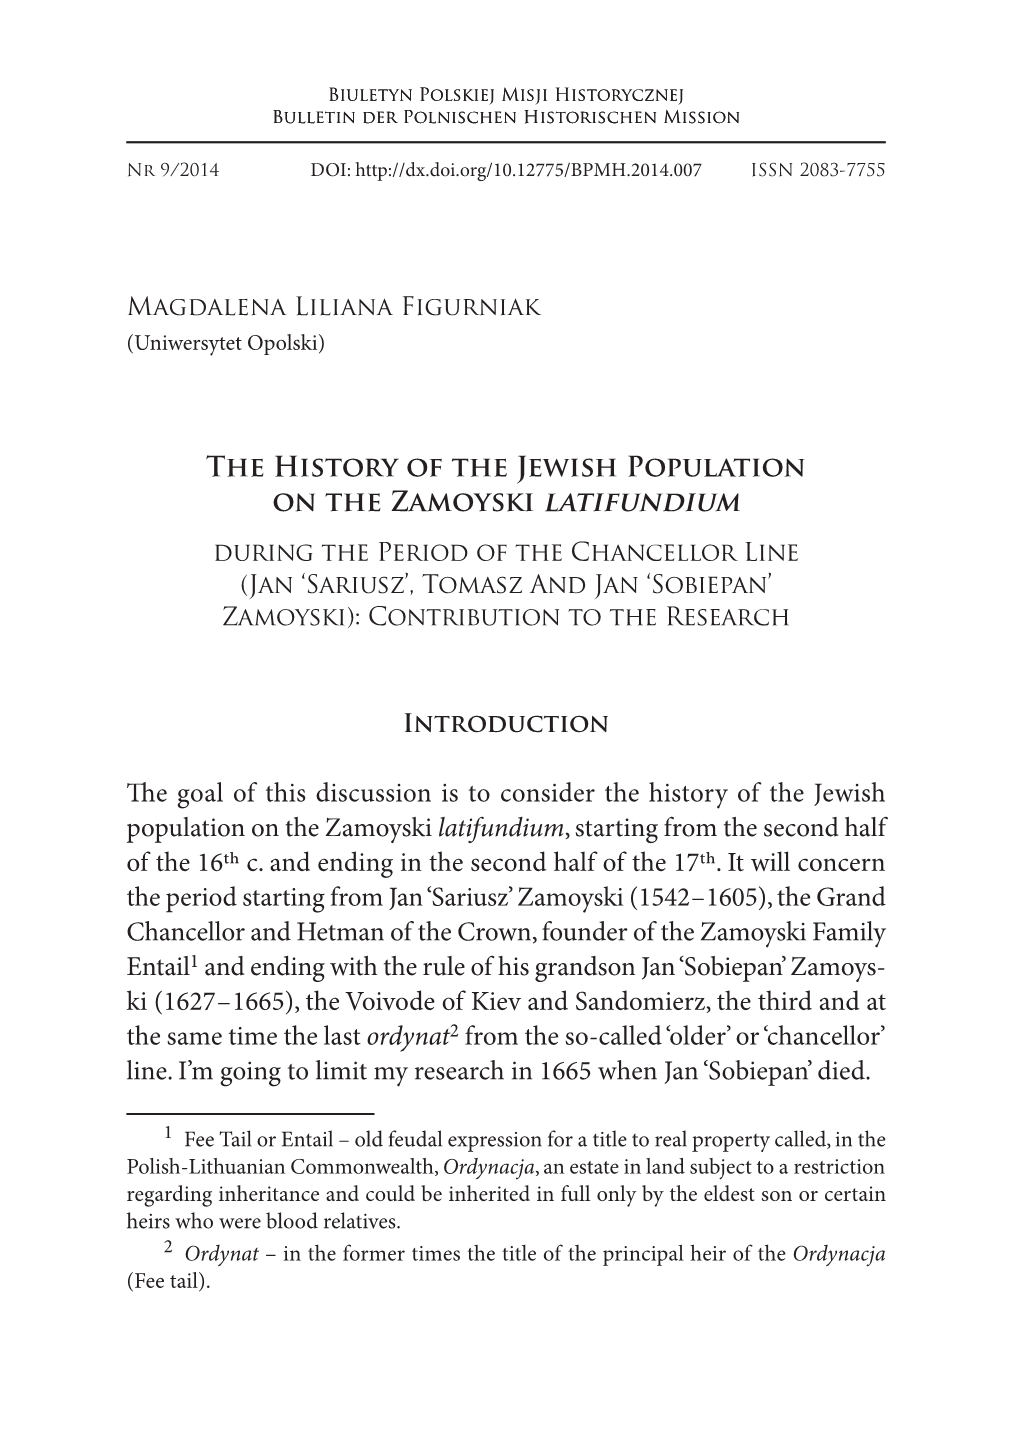 The History of the Jewish Population on the Zamoyski Latifundium The